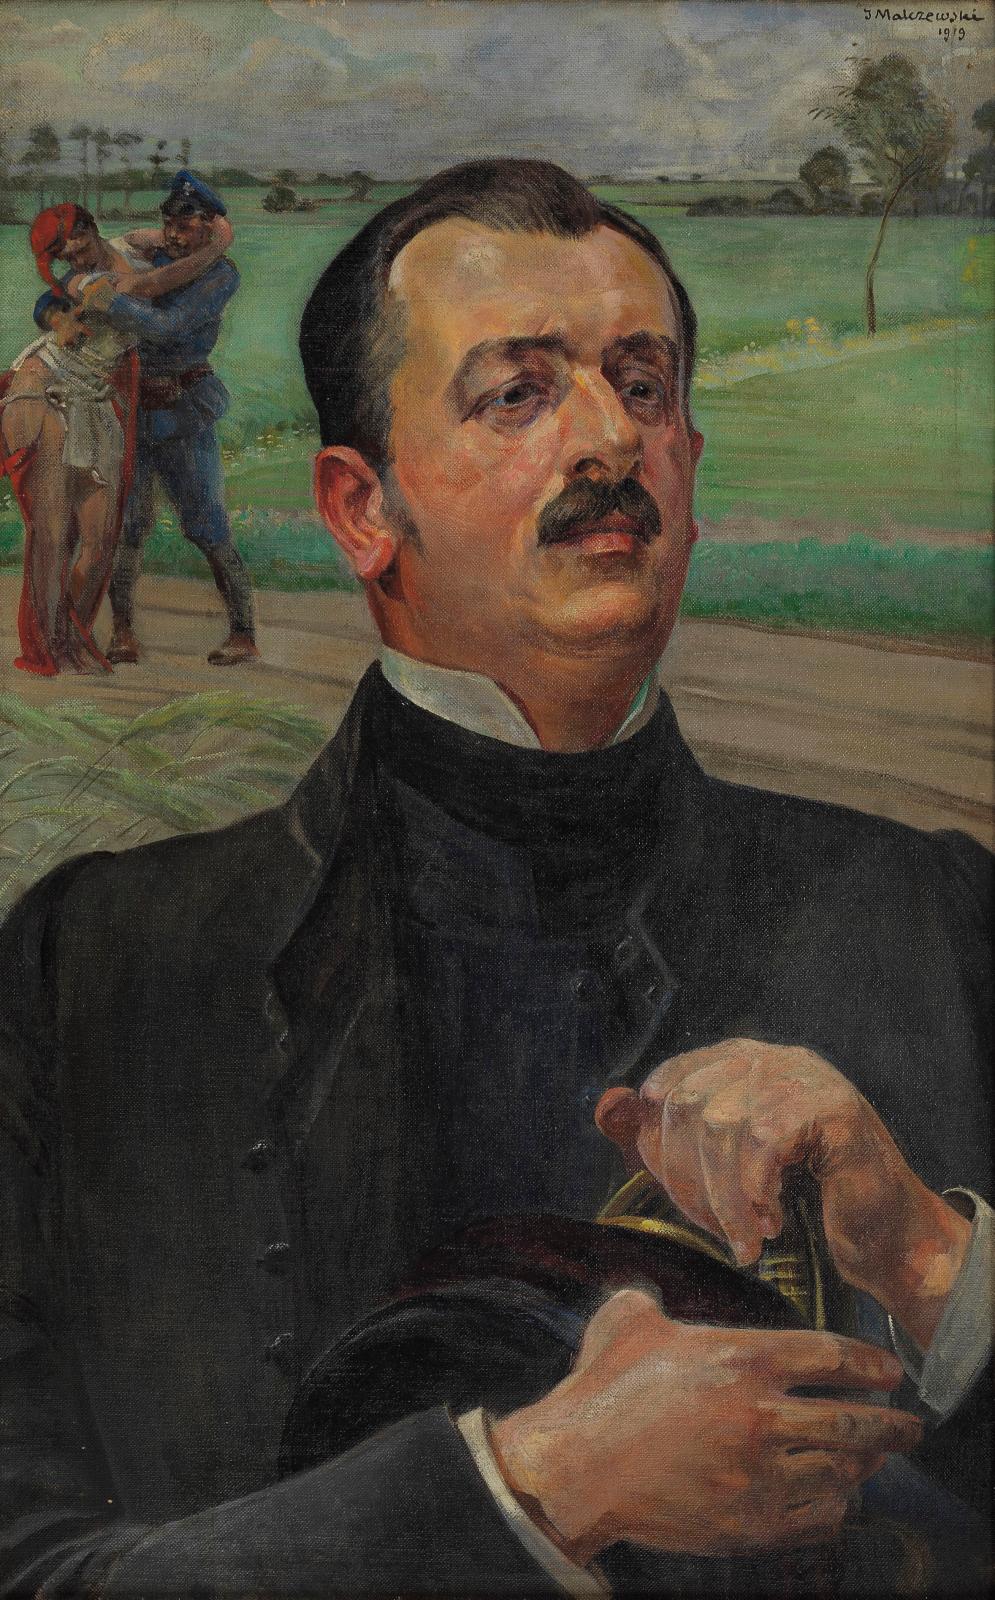 Jacek Malczewski, le Böcklin polonais